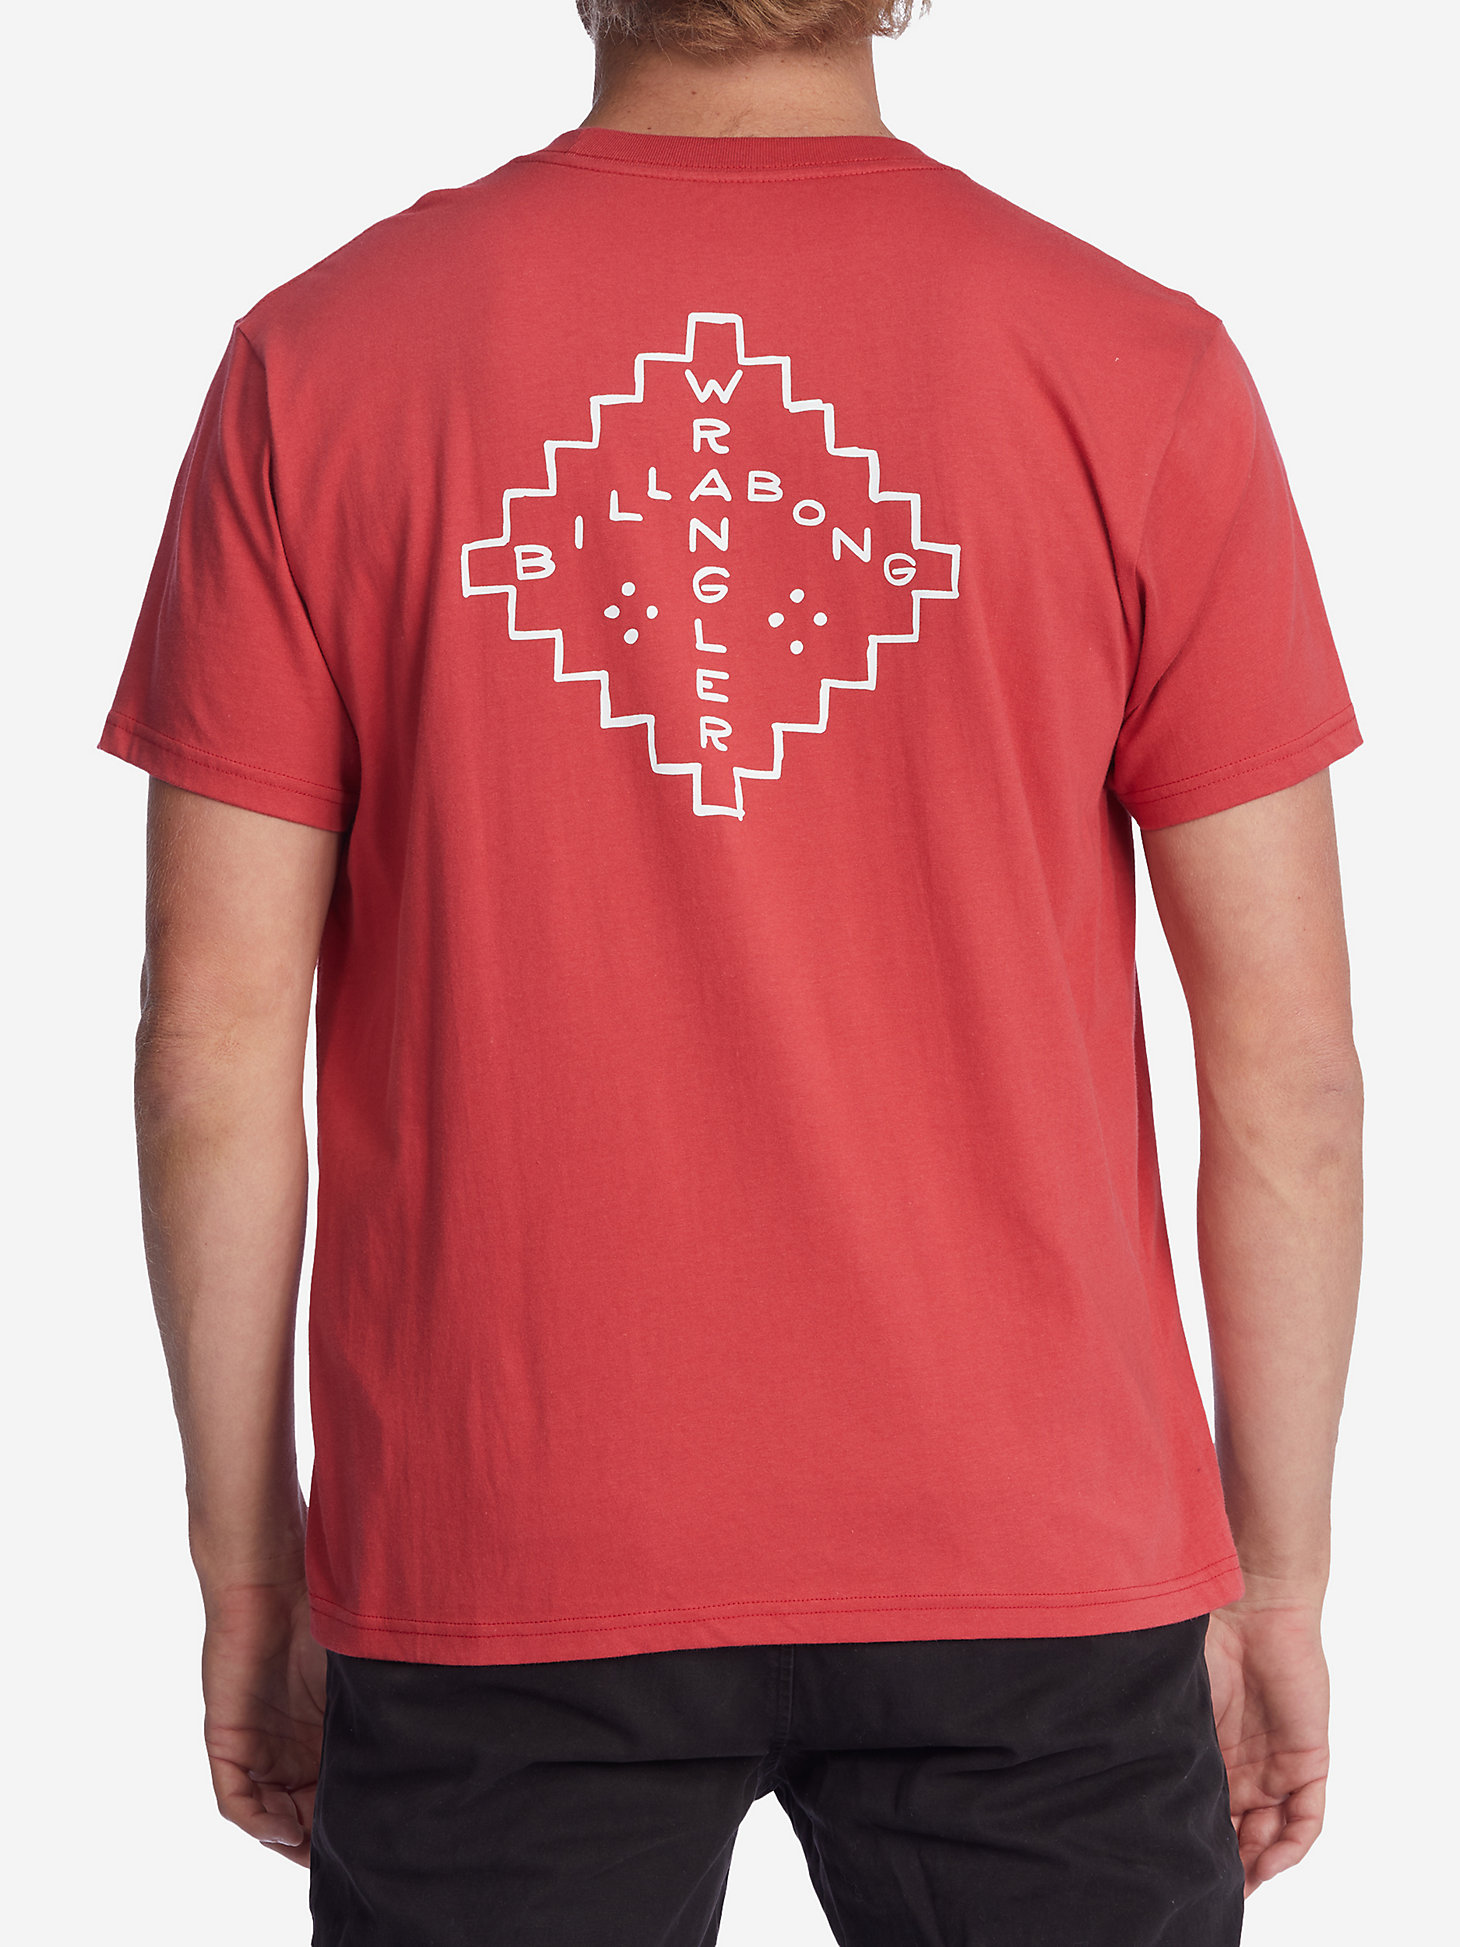 Billabong x Wrangler® Men's Rancher Horizon Graphic T-Shirt in Washed Red alternative view 4